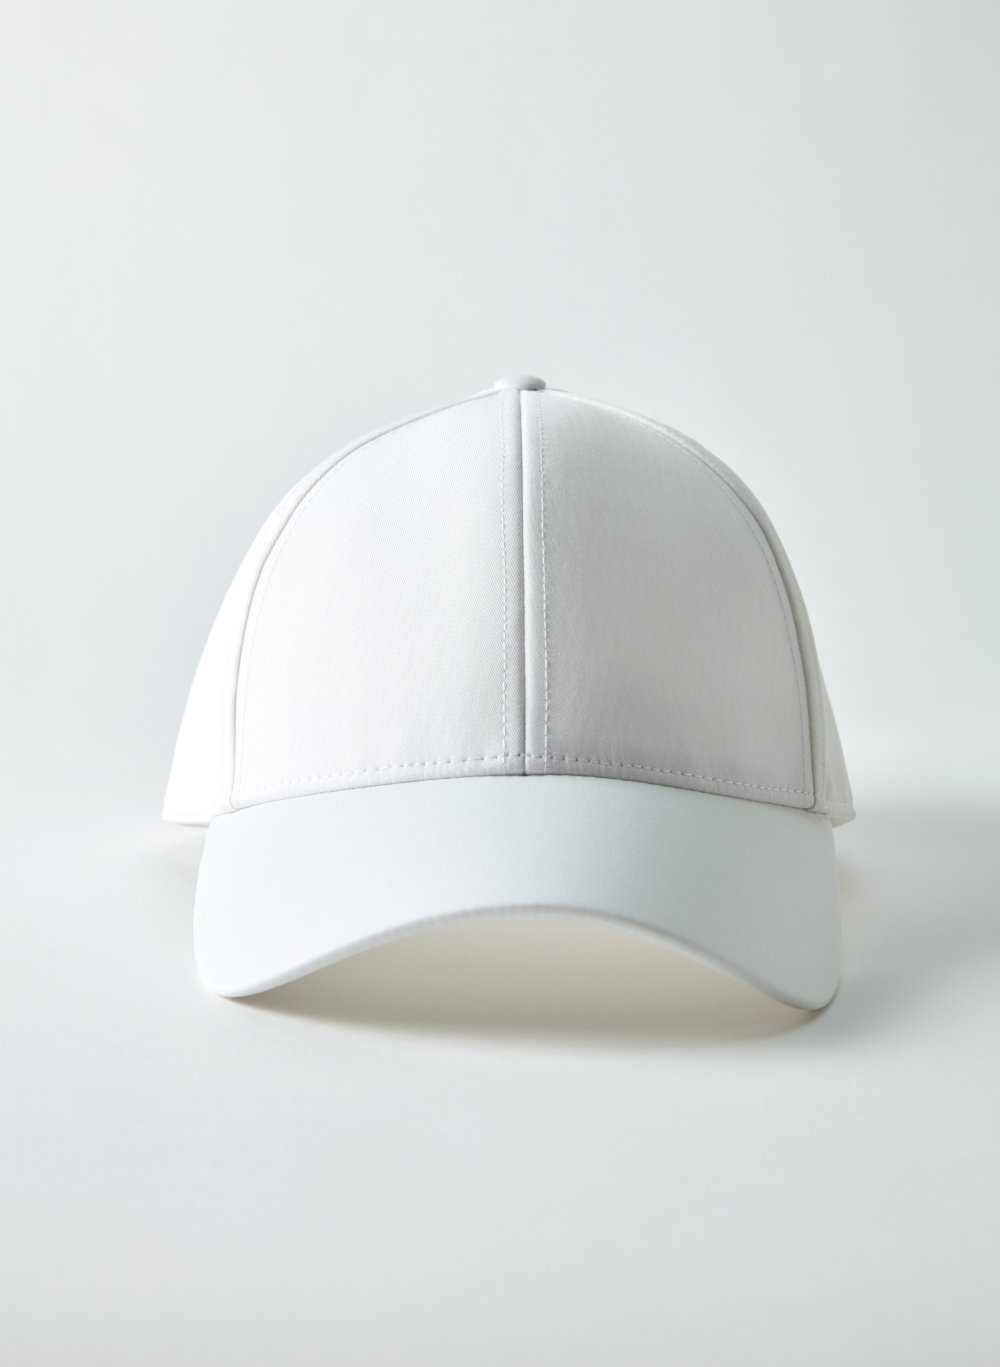 Unisex Classic Novelty Tennis Cap Baseball Hat HMLA-469/_Logo Outdoor Cap Adjustable